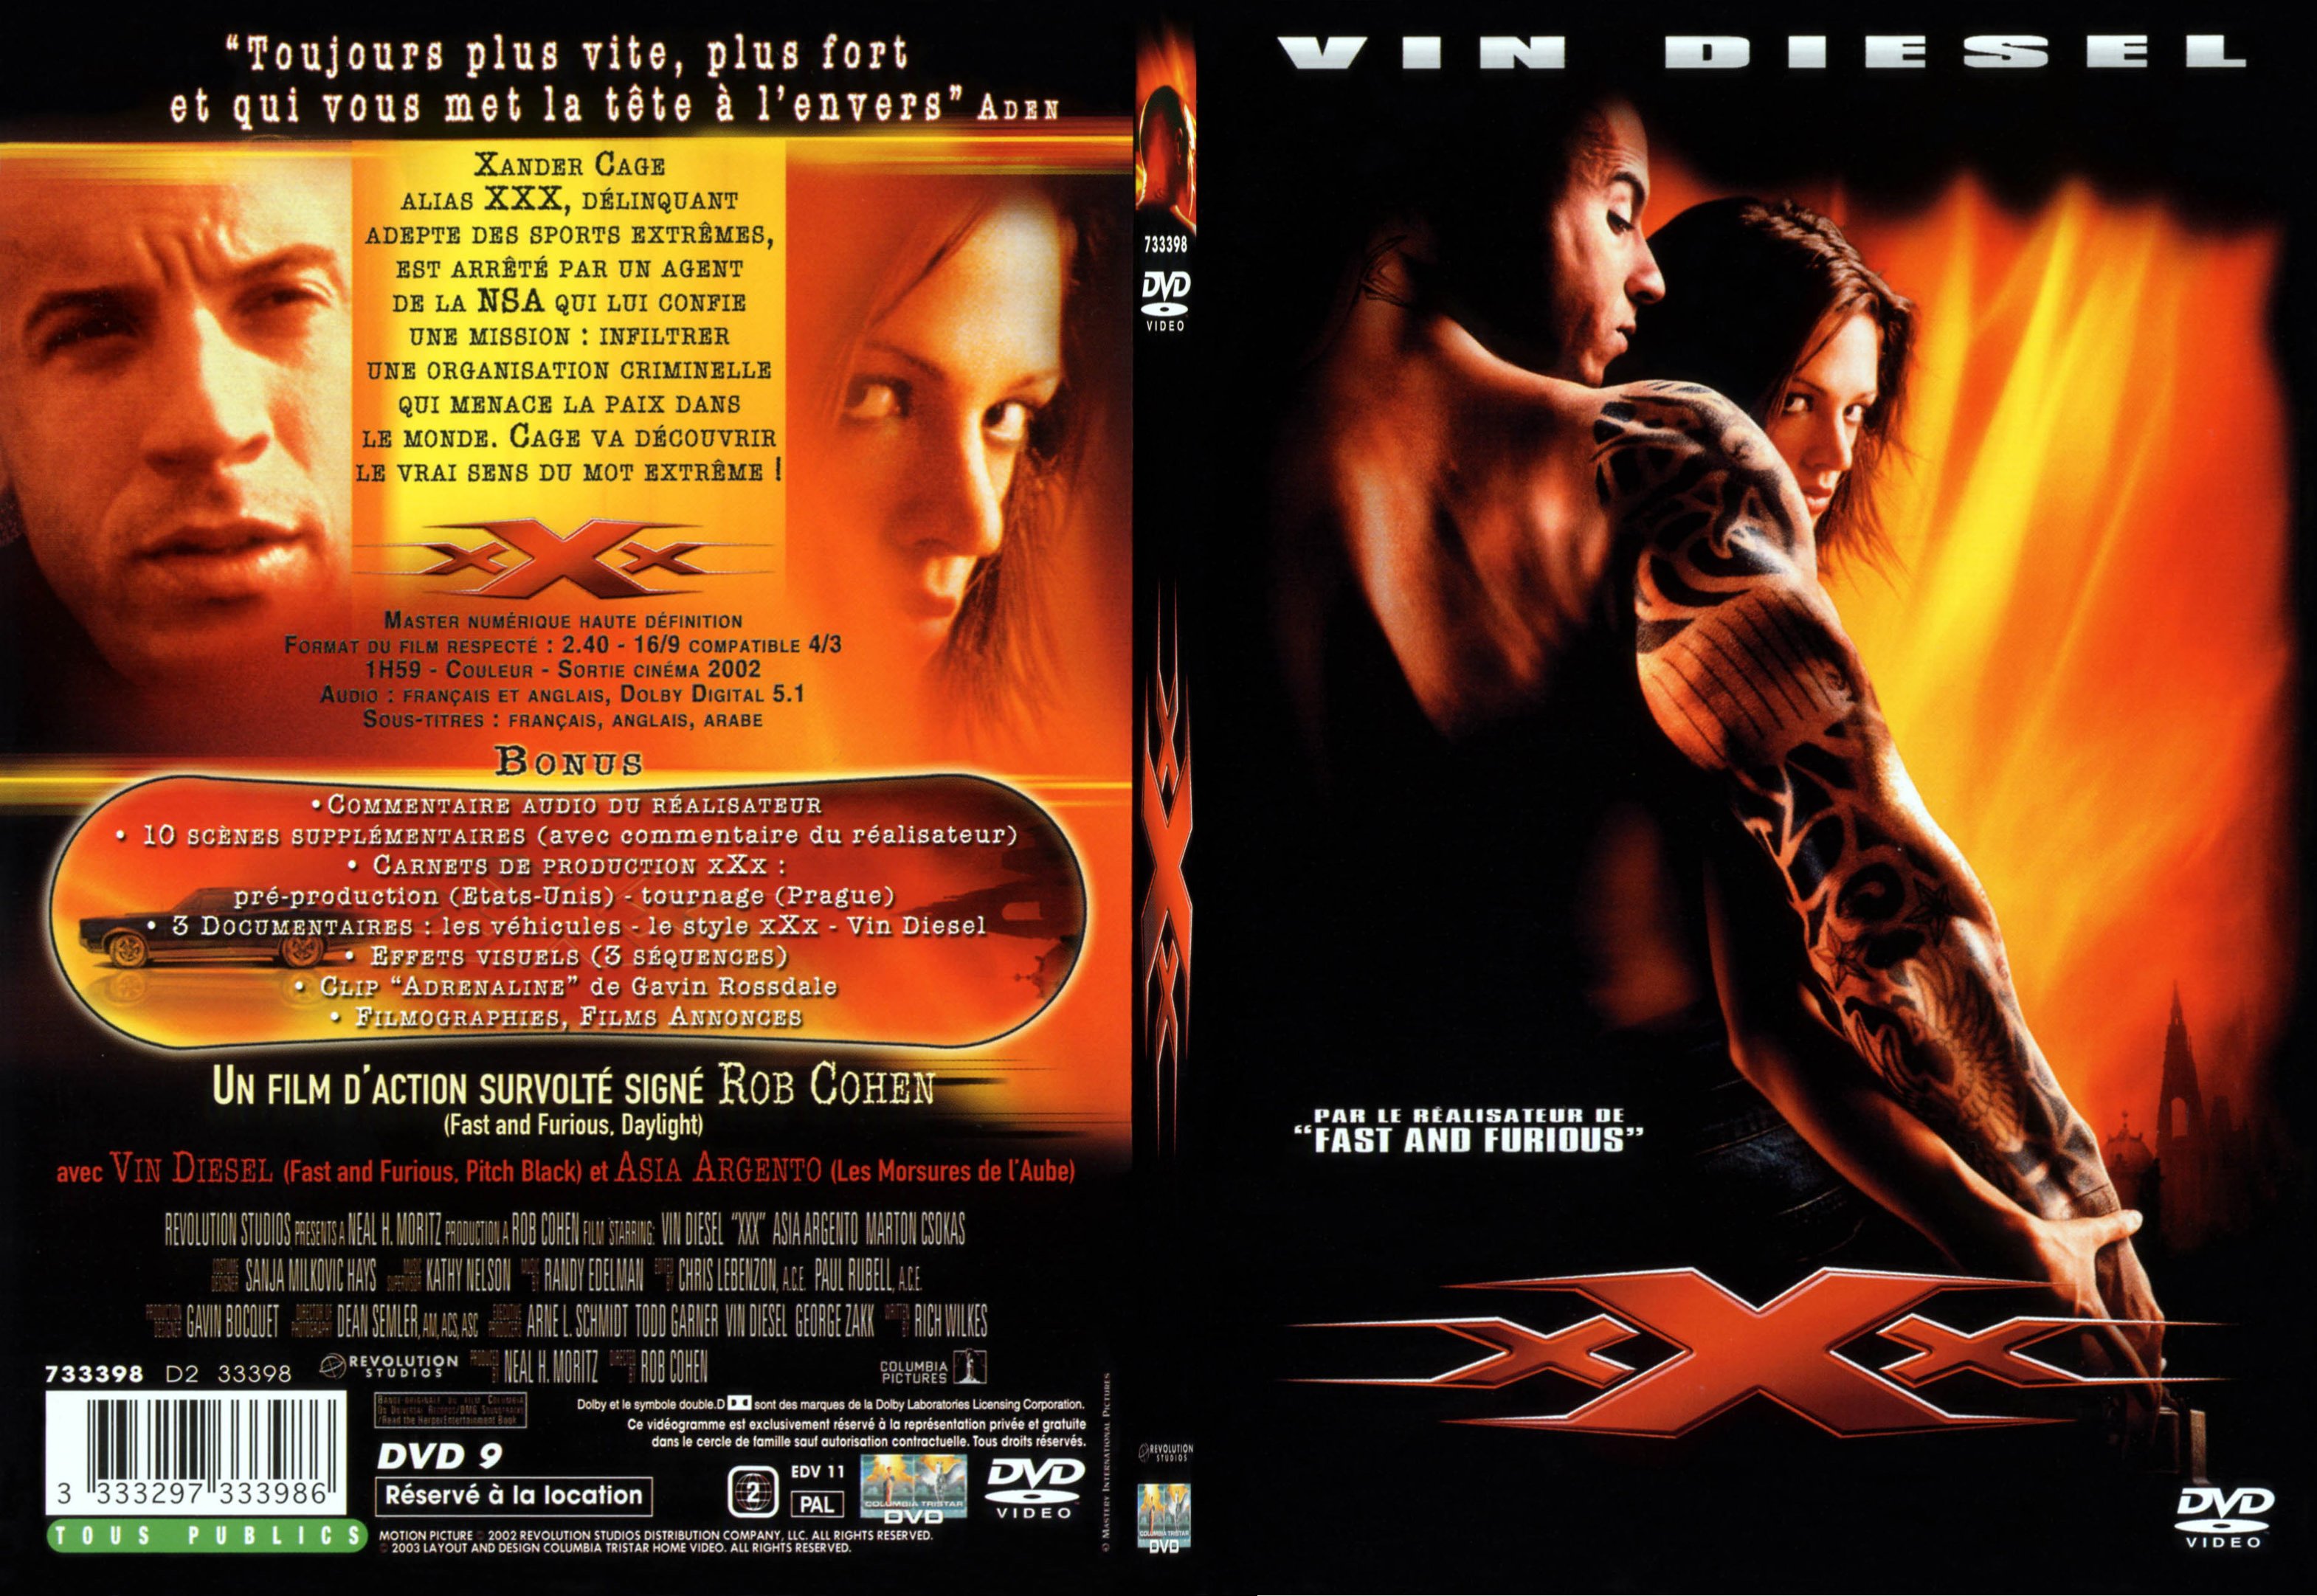 Jaquette DVD XXX - SLIM.